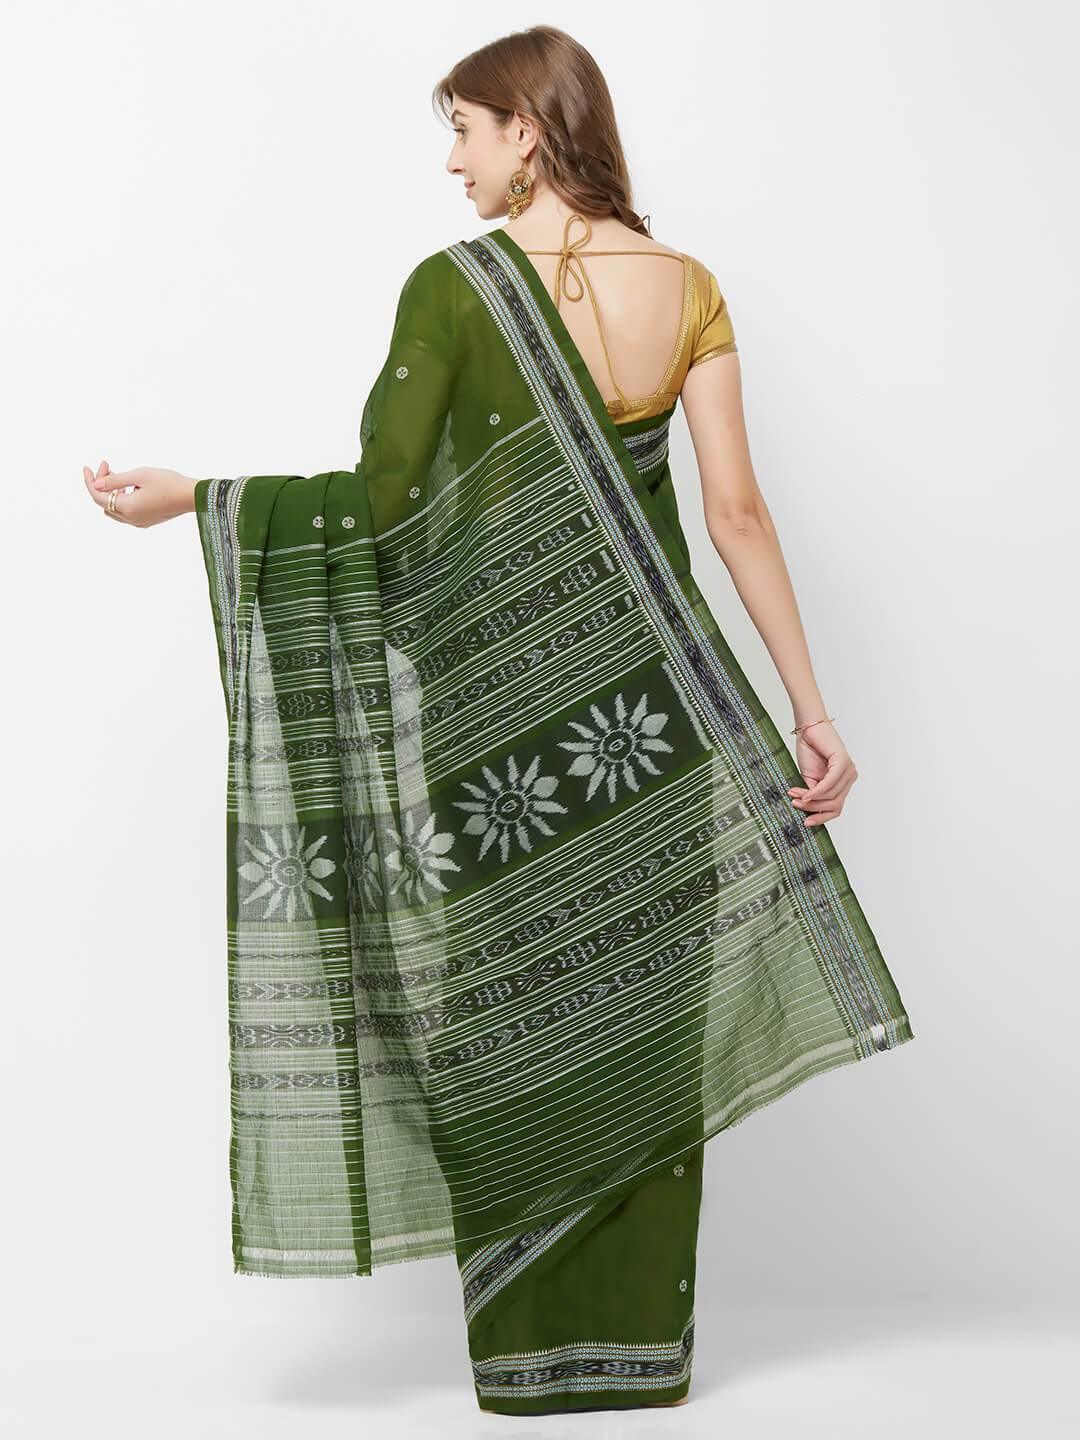 CraftsCollection.in -Green Odisha Cotton Saree with matching Sambalpuri Blouse